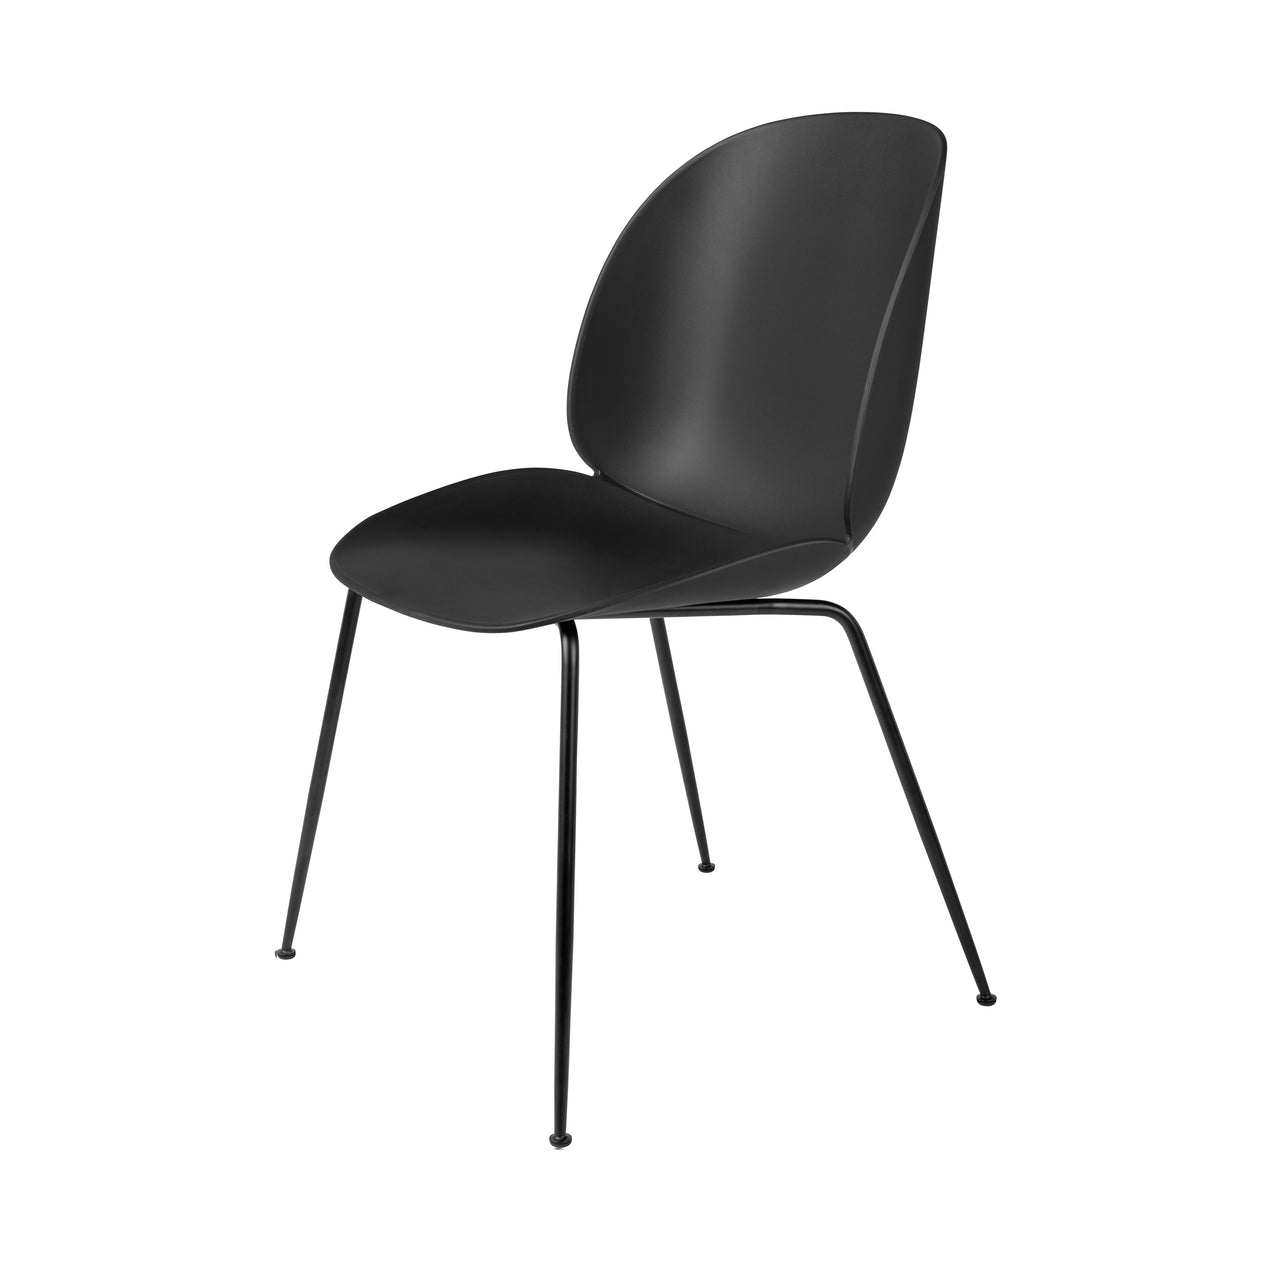 Beetle Dining Chair: Conic Base + Black + Black Matt + Felt Glides